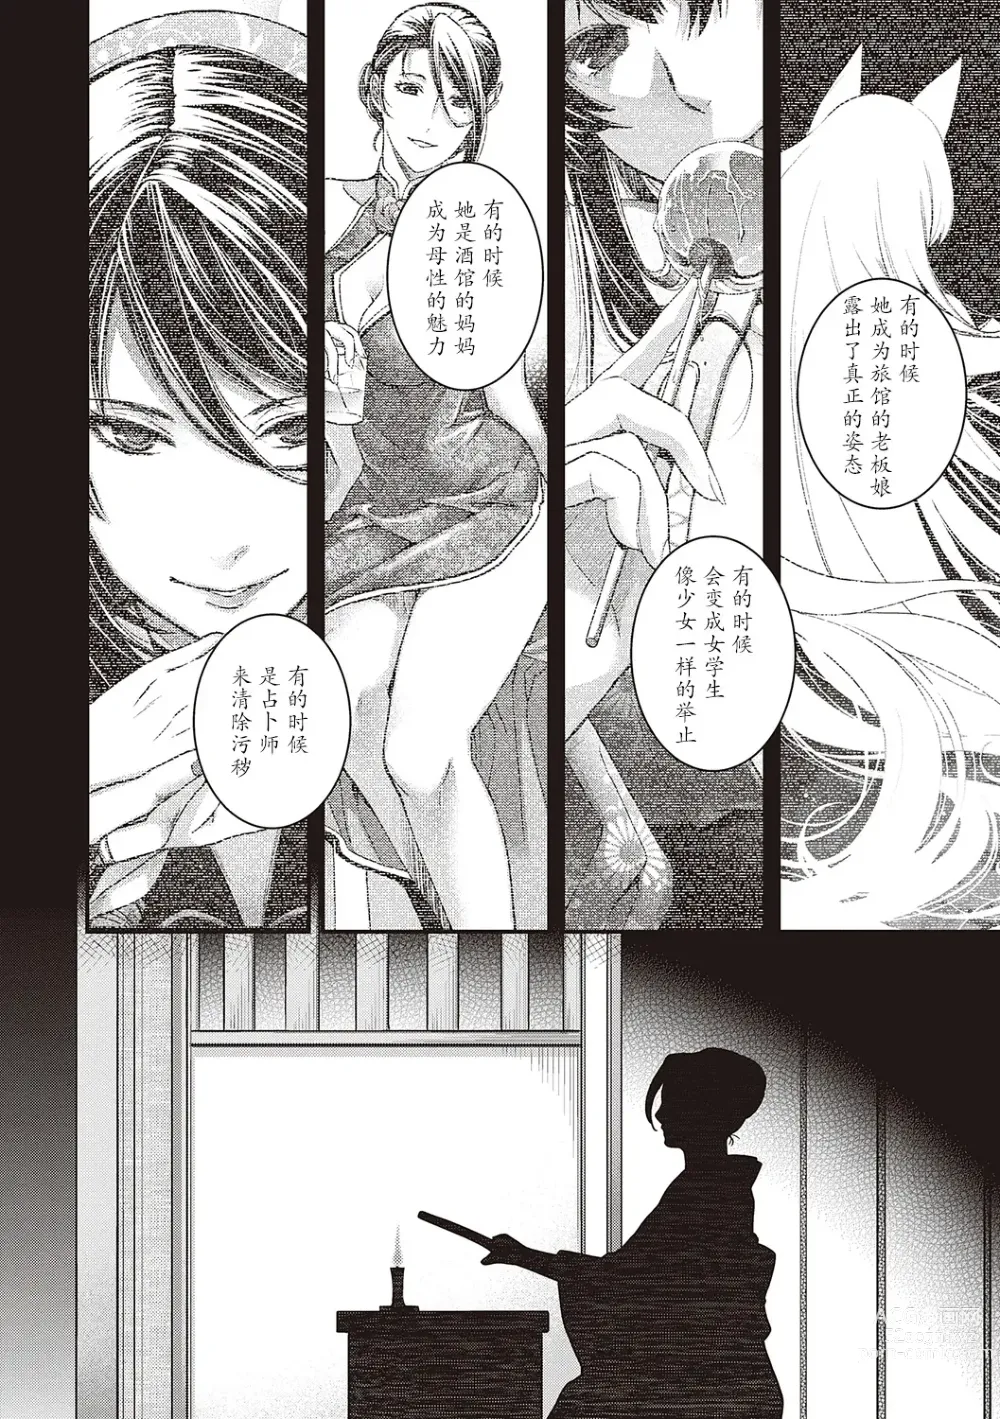 Page 6 of manga 彼誰時家族会議  演目『廻夜のケモノ』